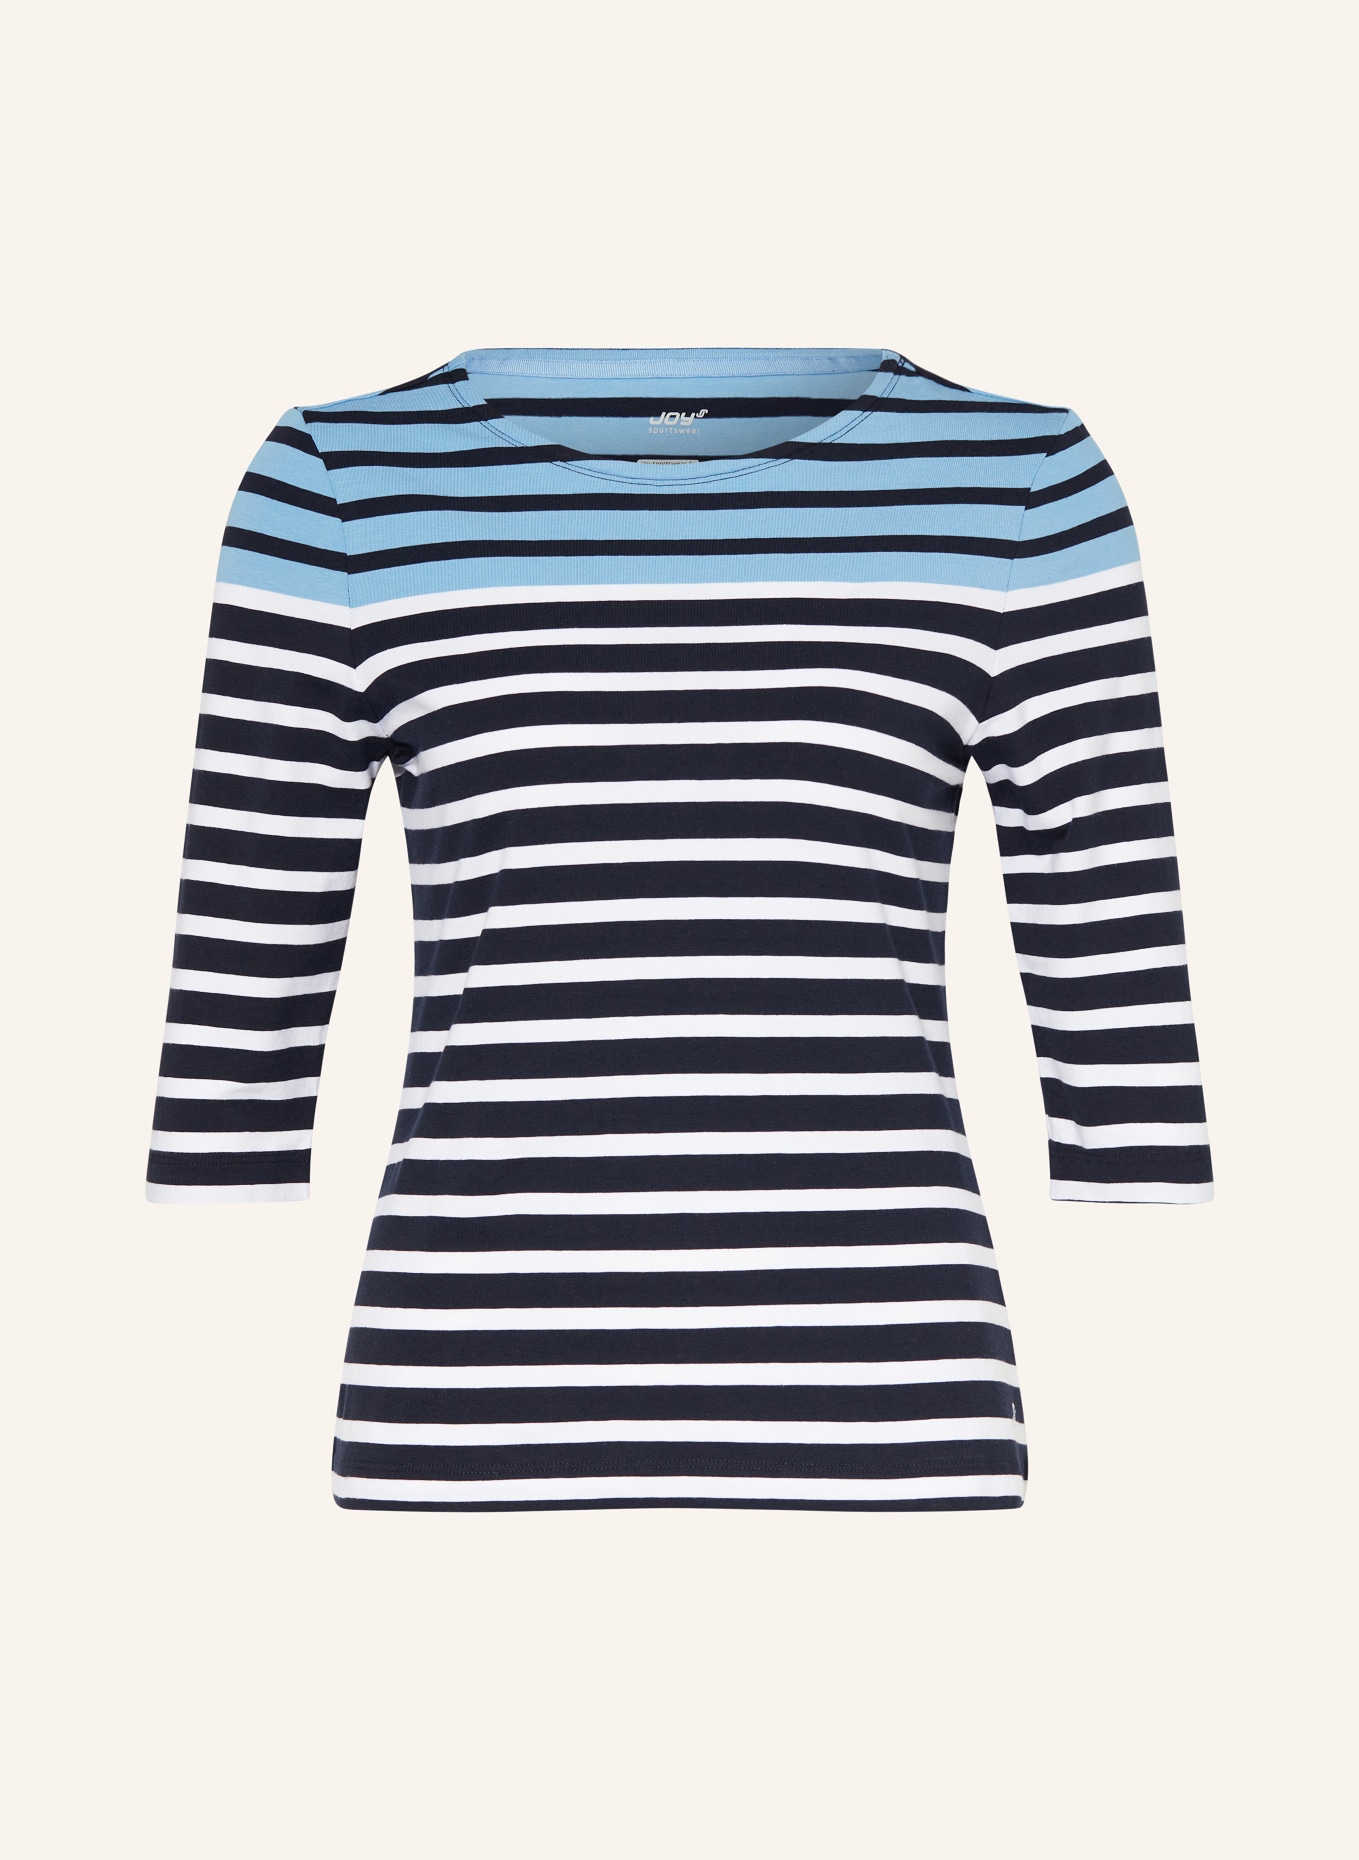 JOY sportswear Shirt CELIA mit 3/4-Arm, Farbe: DUNKELBLAU/ HELLBLAU/ WEISS (Bild 1)